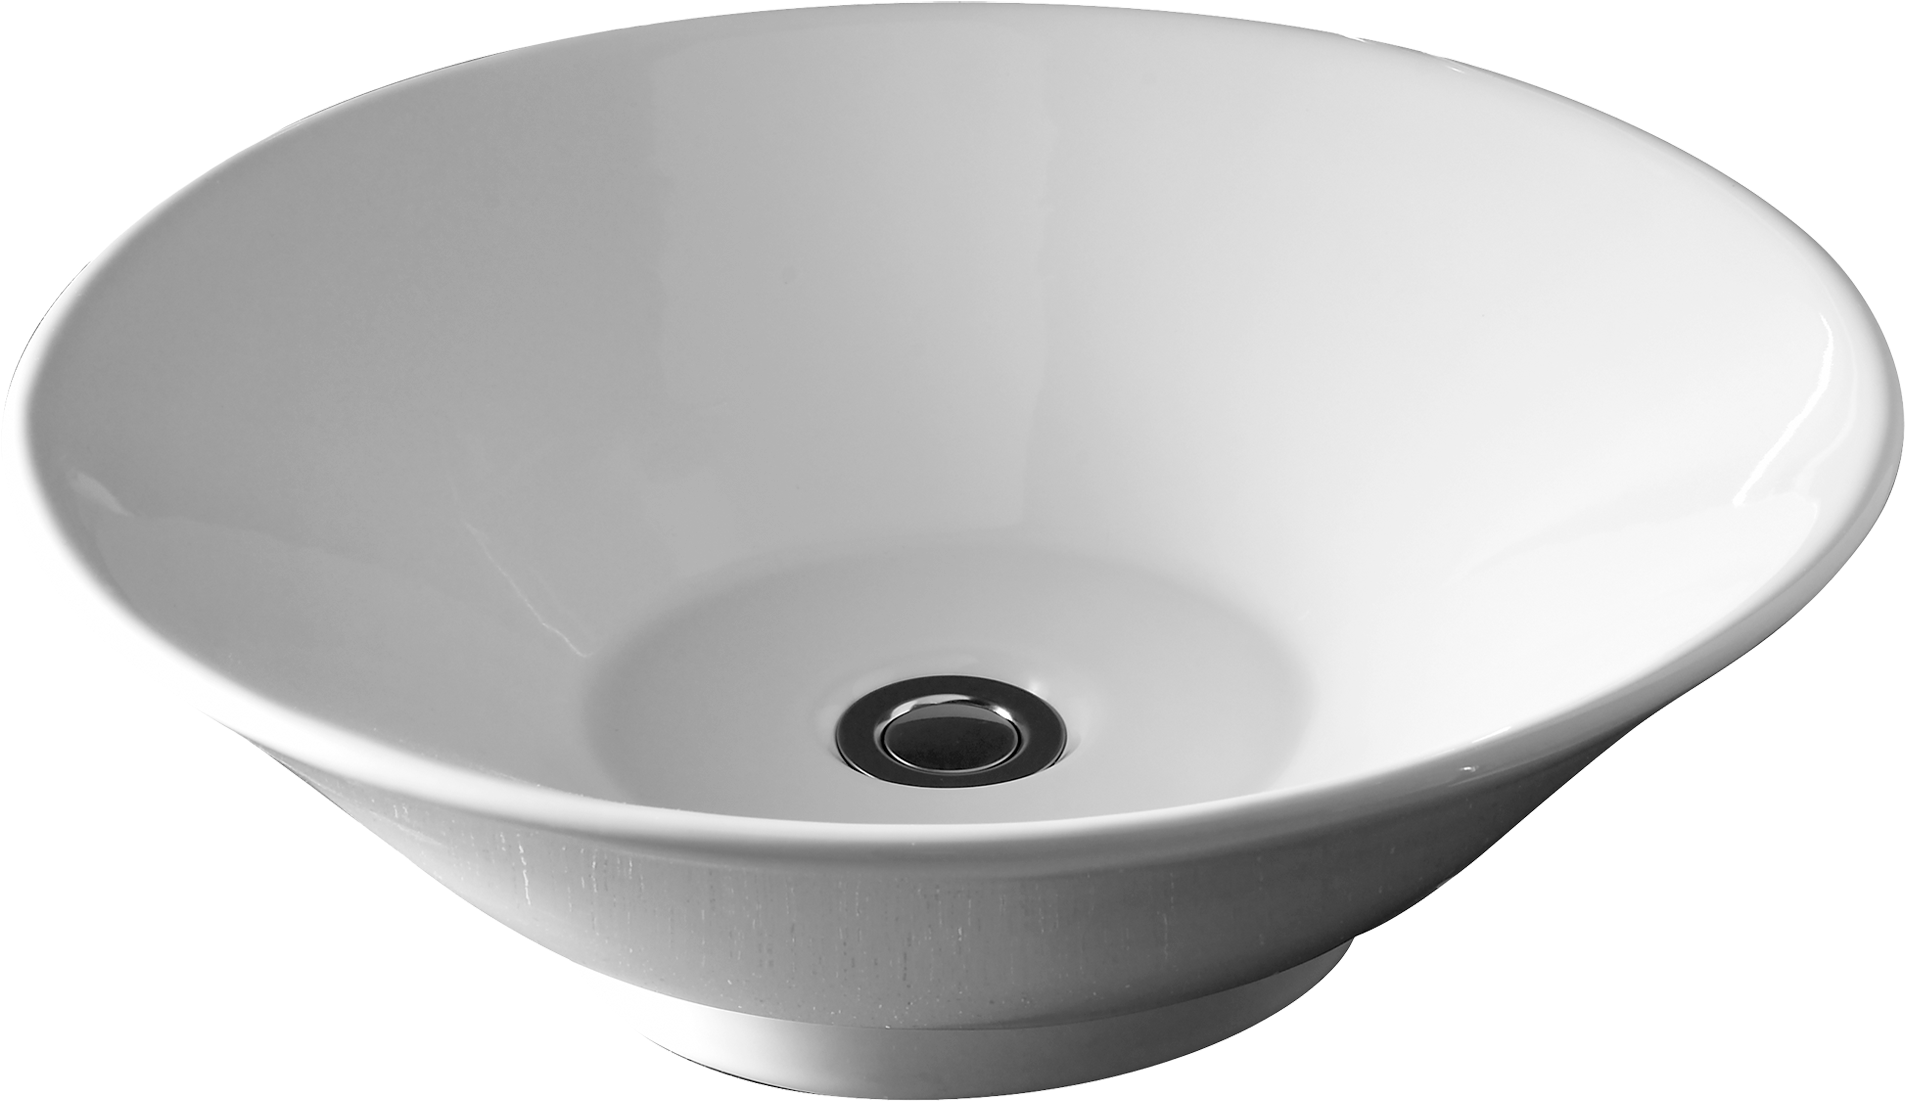 White Ceramic Bathroom Sink PNG image